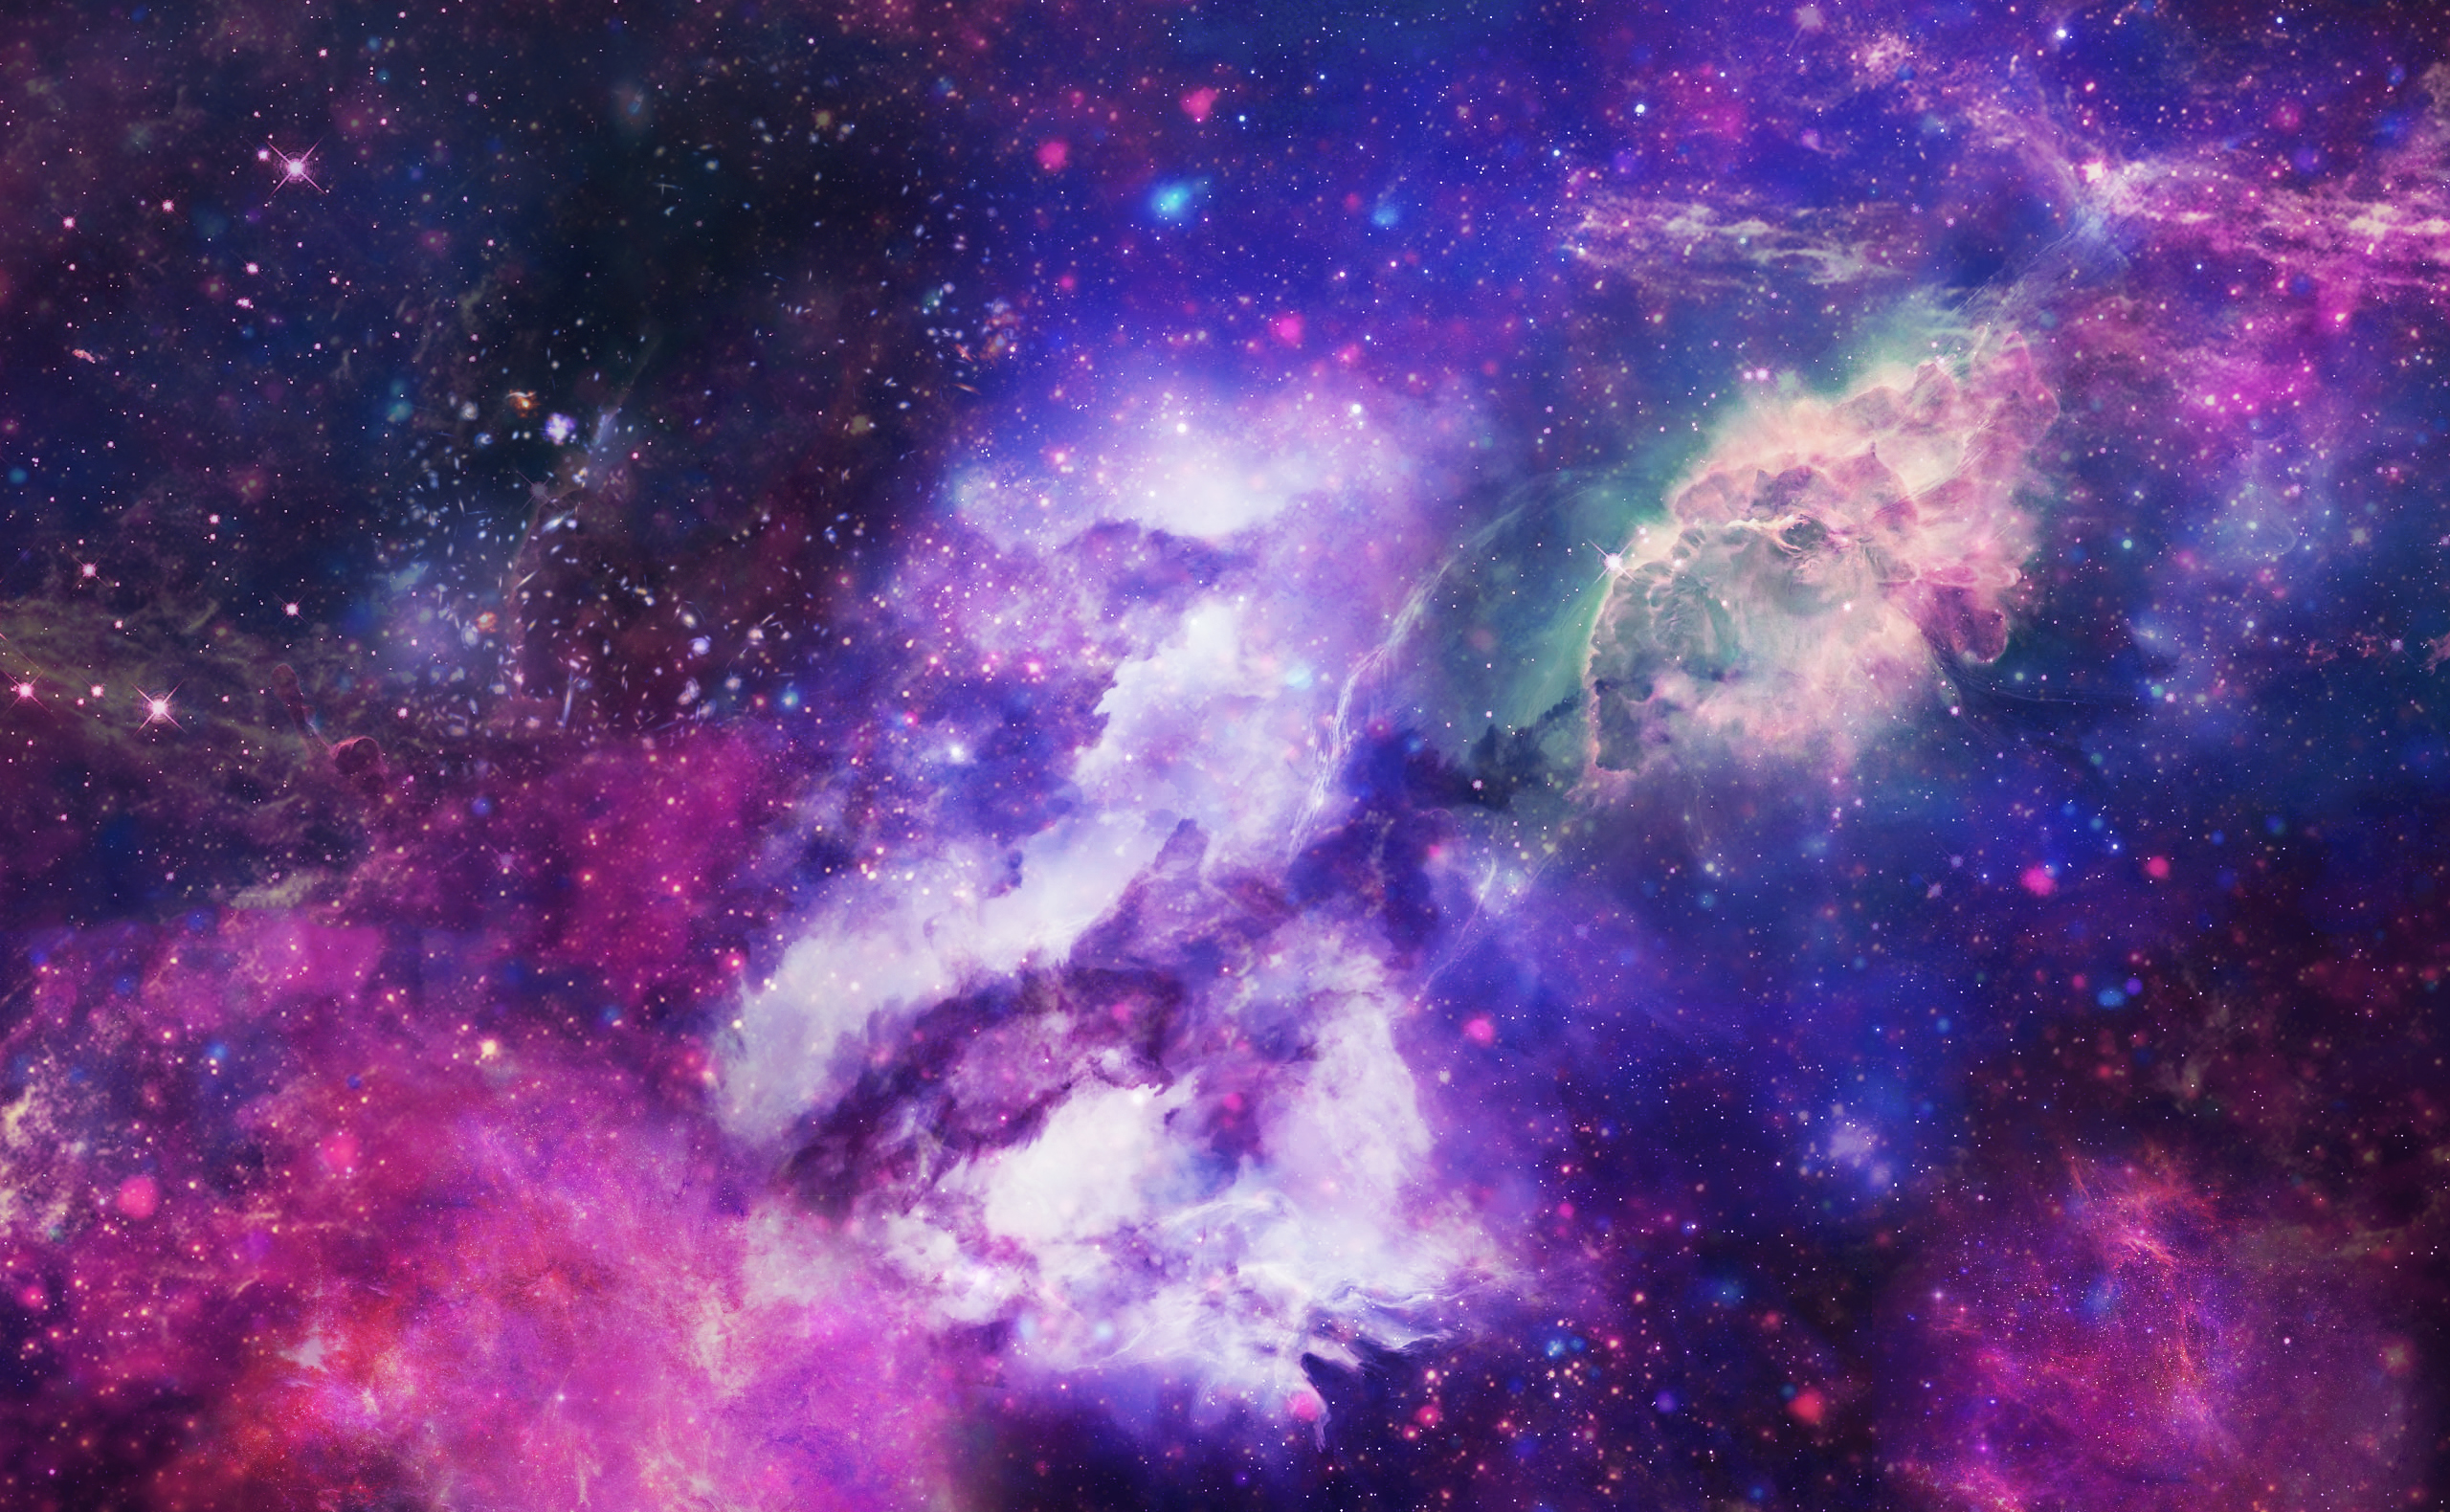 Free Space/Galaxy Texture by Lyshastra on DeviantArt